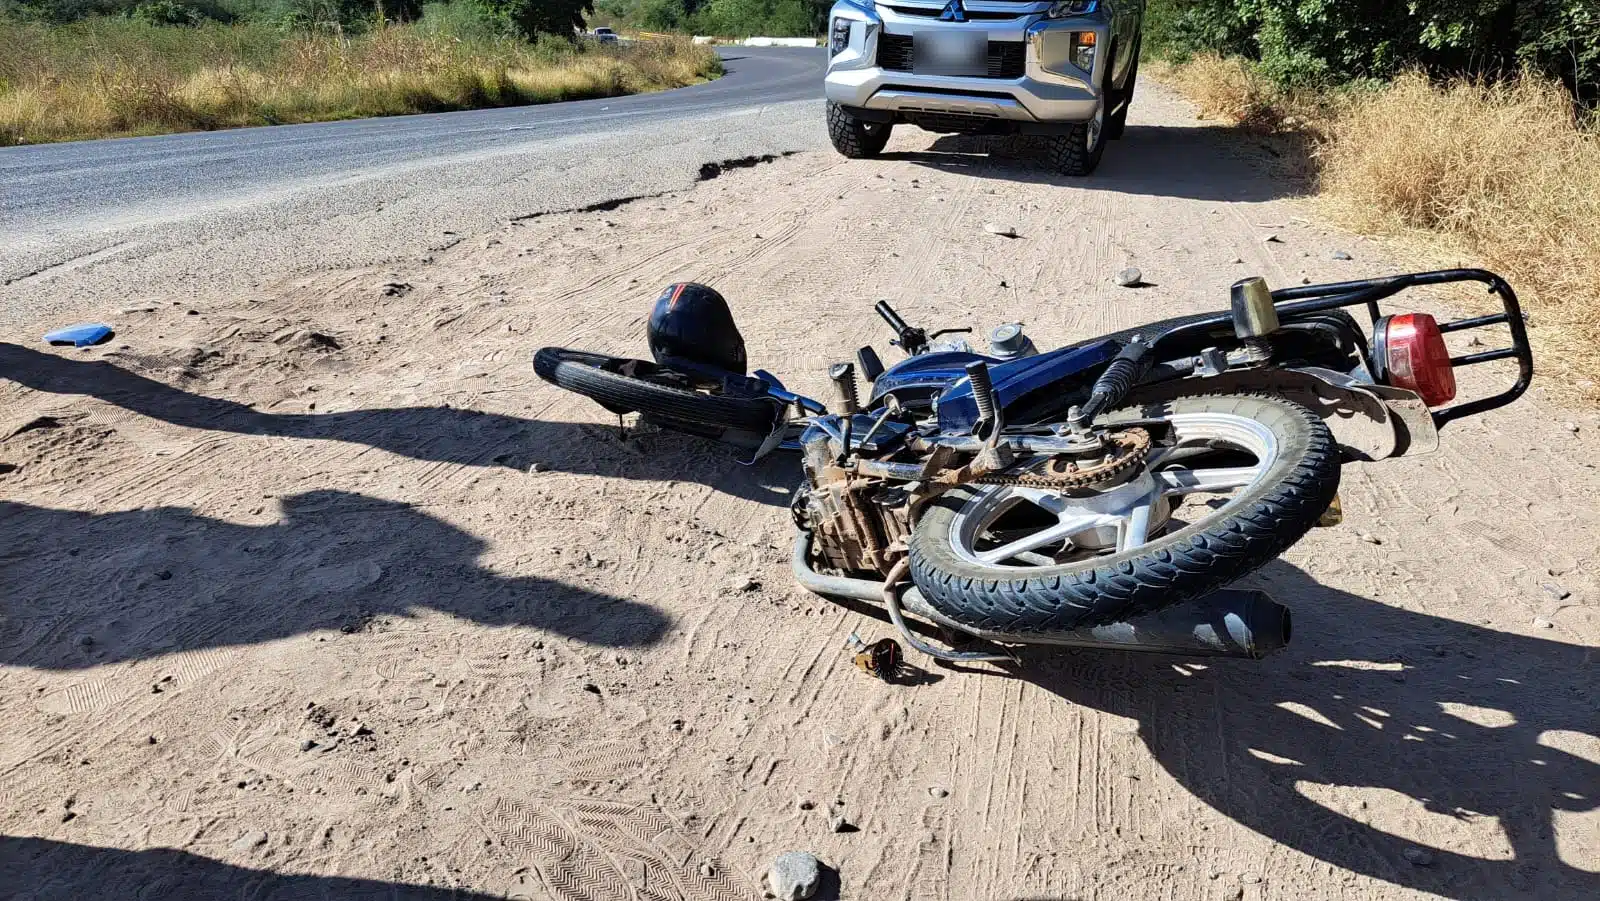 Motocicleta chocada en Angostura